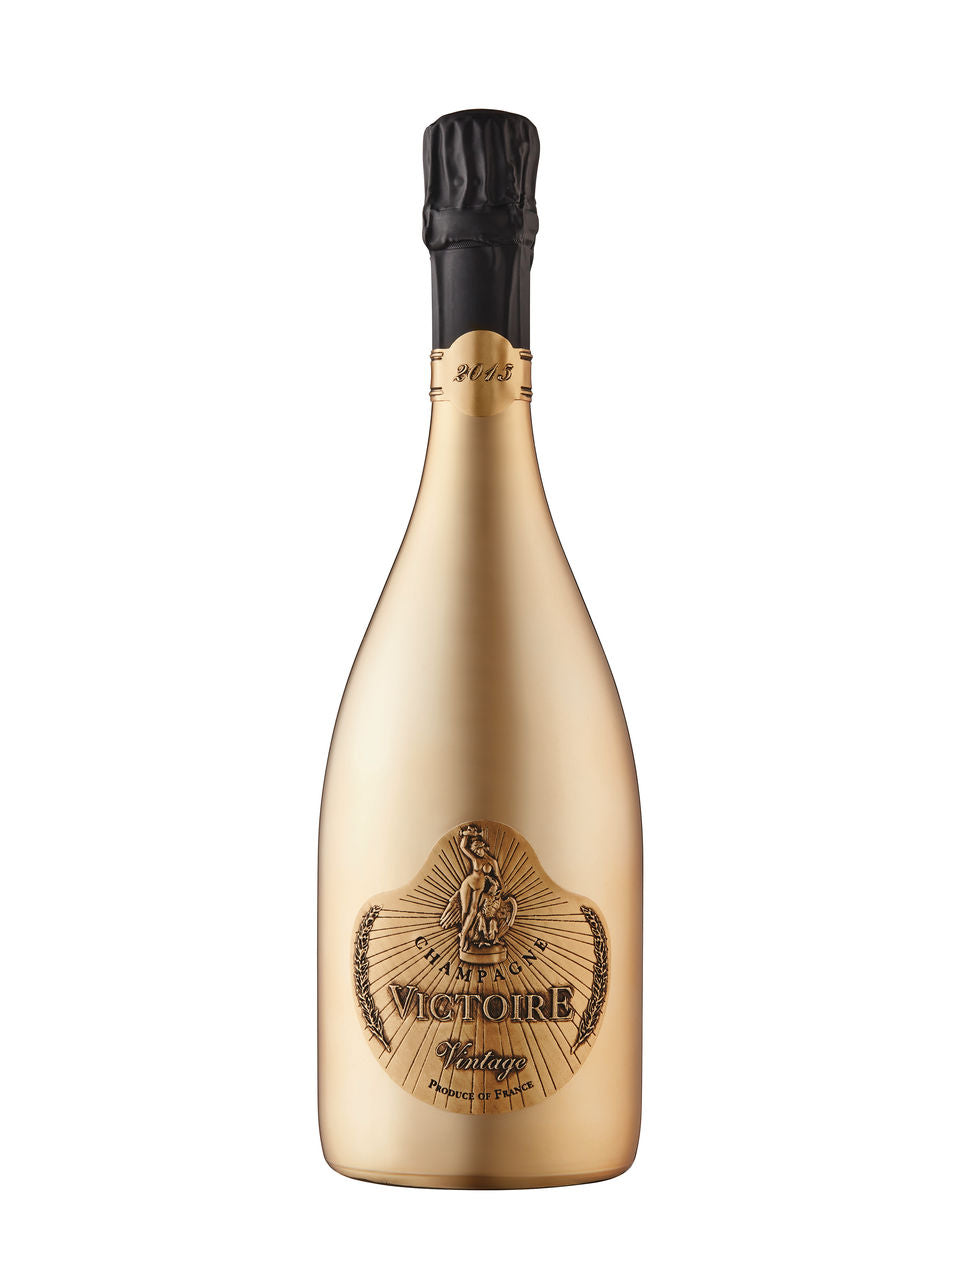 G.H. Martel Victoire Cuvée Gold Edition Champagne 2015 750 ml bottle VINTAGES